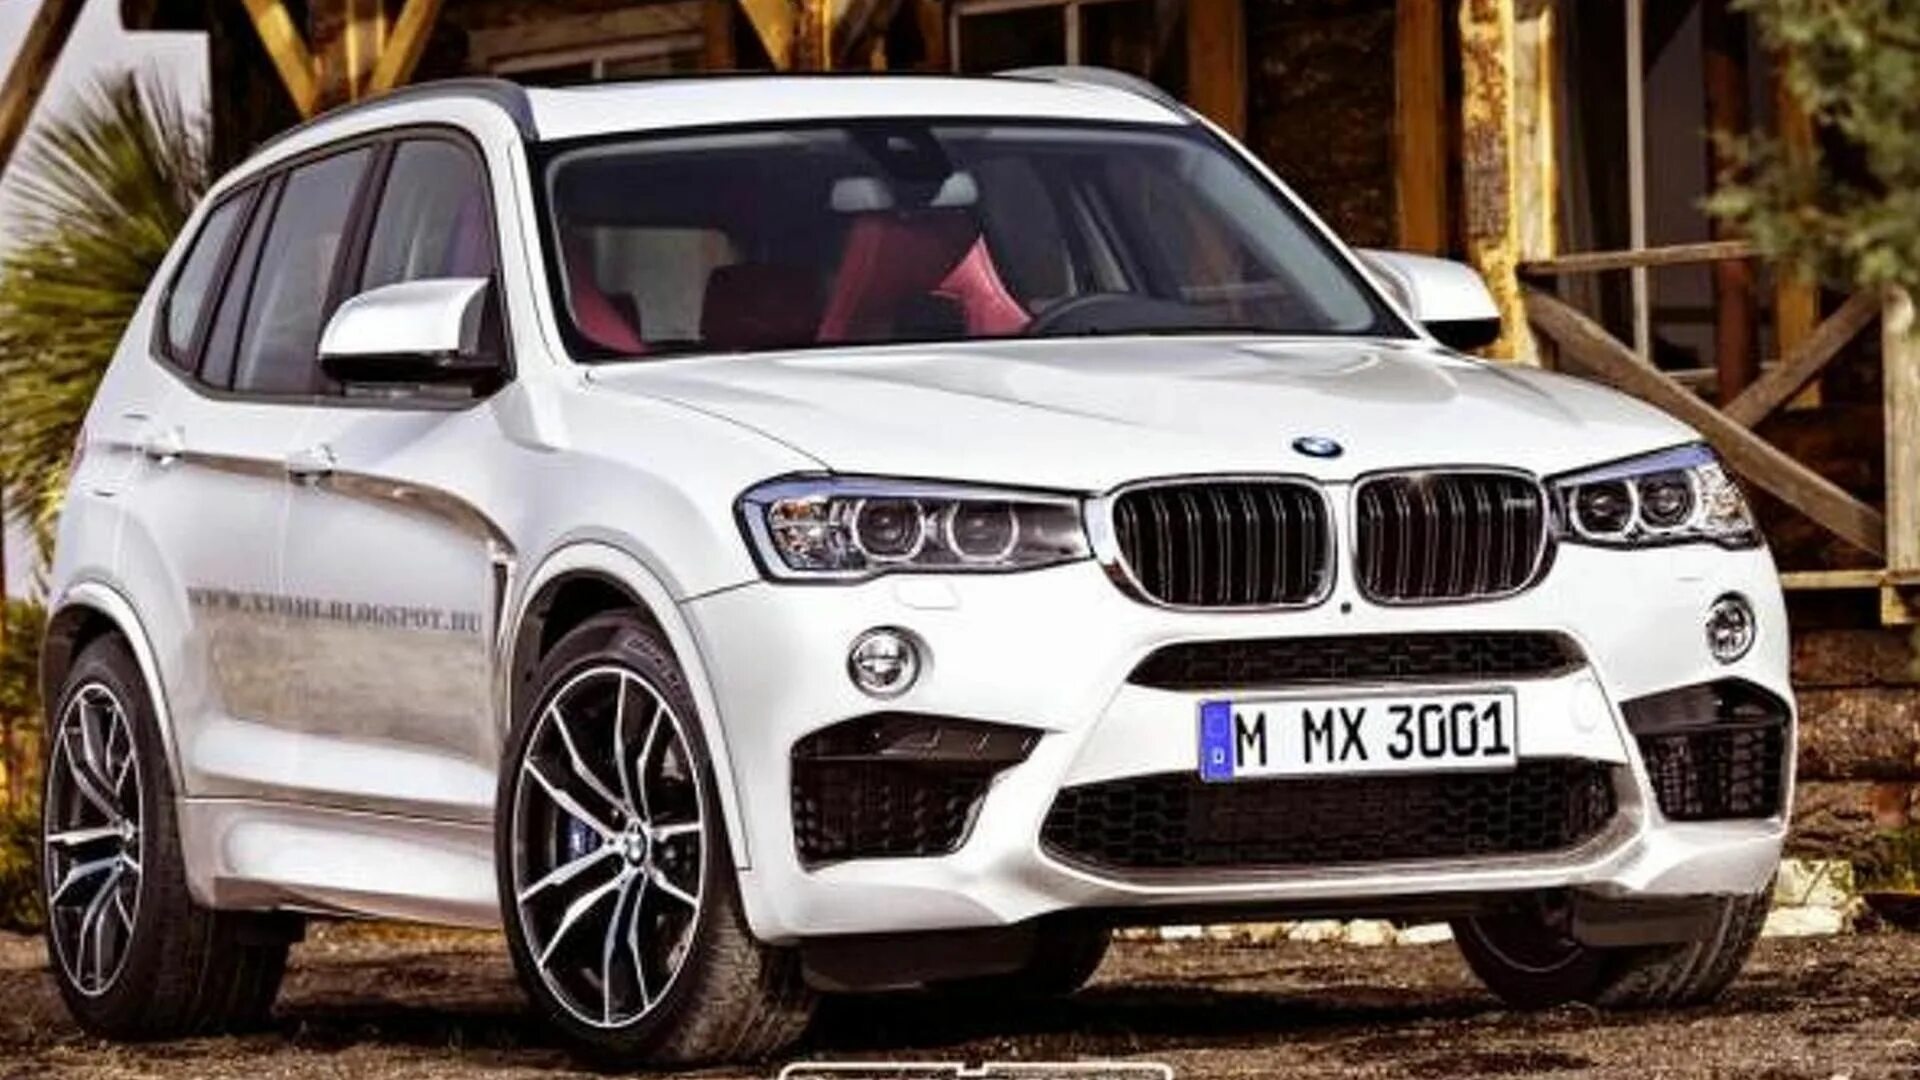 X6 x3 2. BMW x3 m пакет. BMW x3 m 2015. BMW x3 f25 m пакет. BMW x3 m 2014.